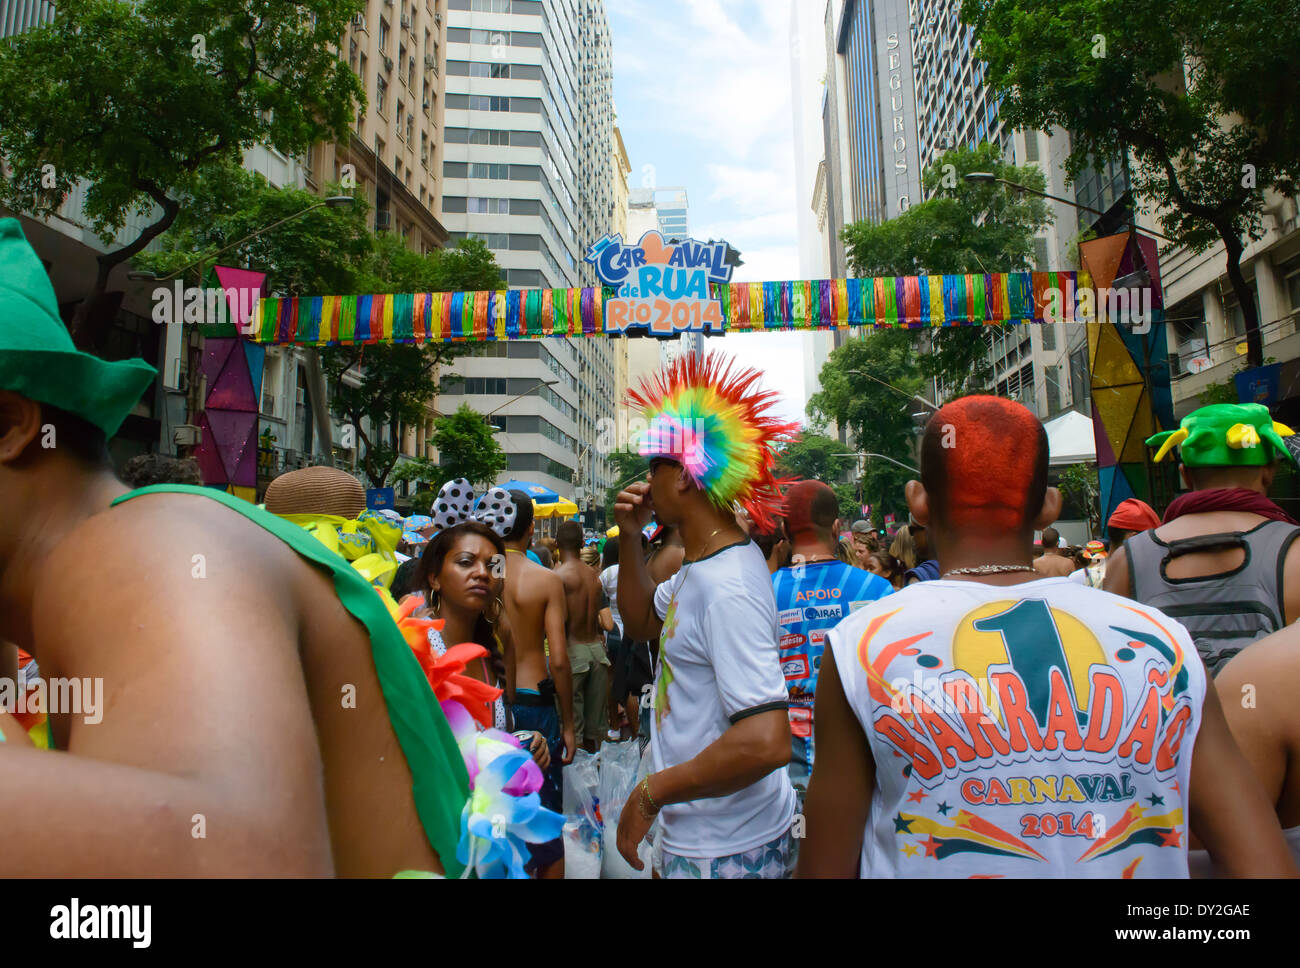 Rainbow head-dress amongst colourful crowds at street party, Carnival, Rio de Janeiro, 2014 Stock Photo